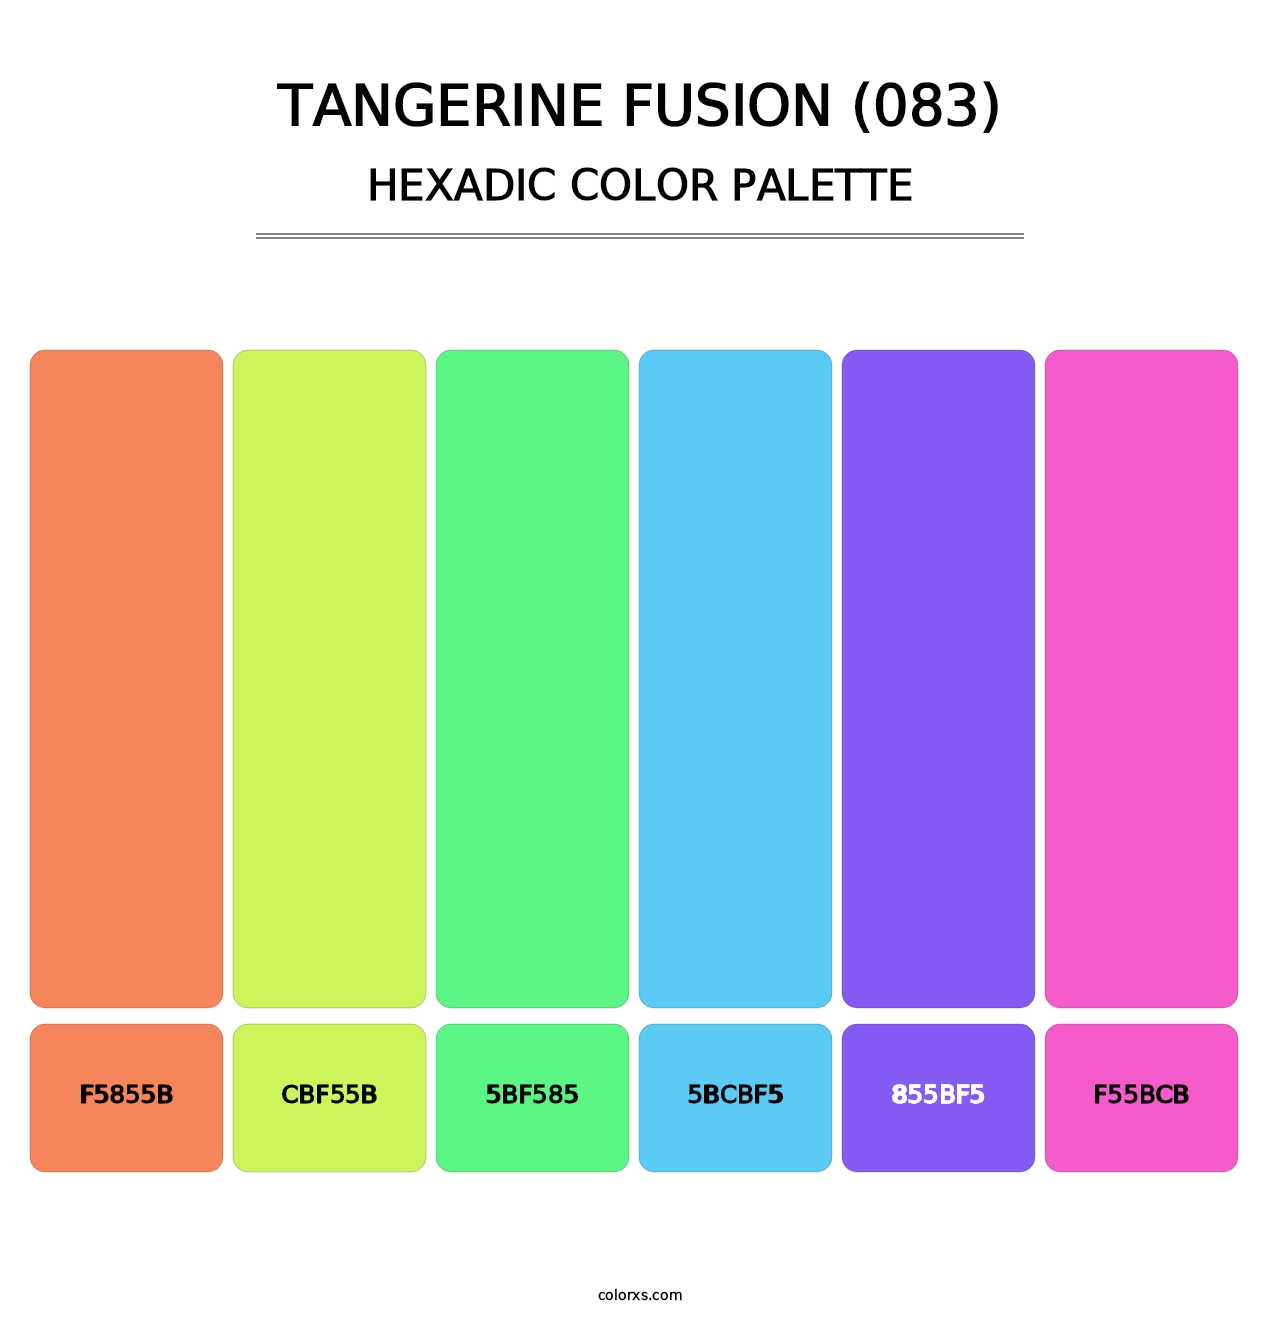 Tangerine Fusion (083) - Hexadic Color Palette